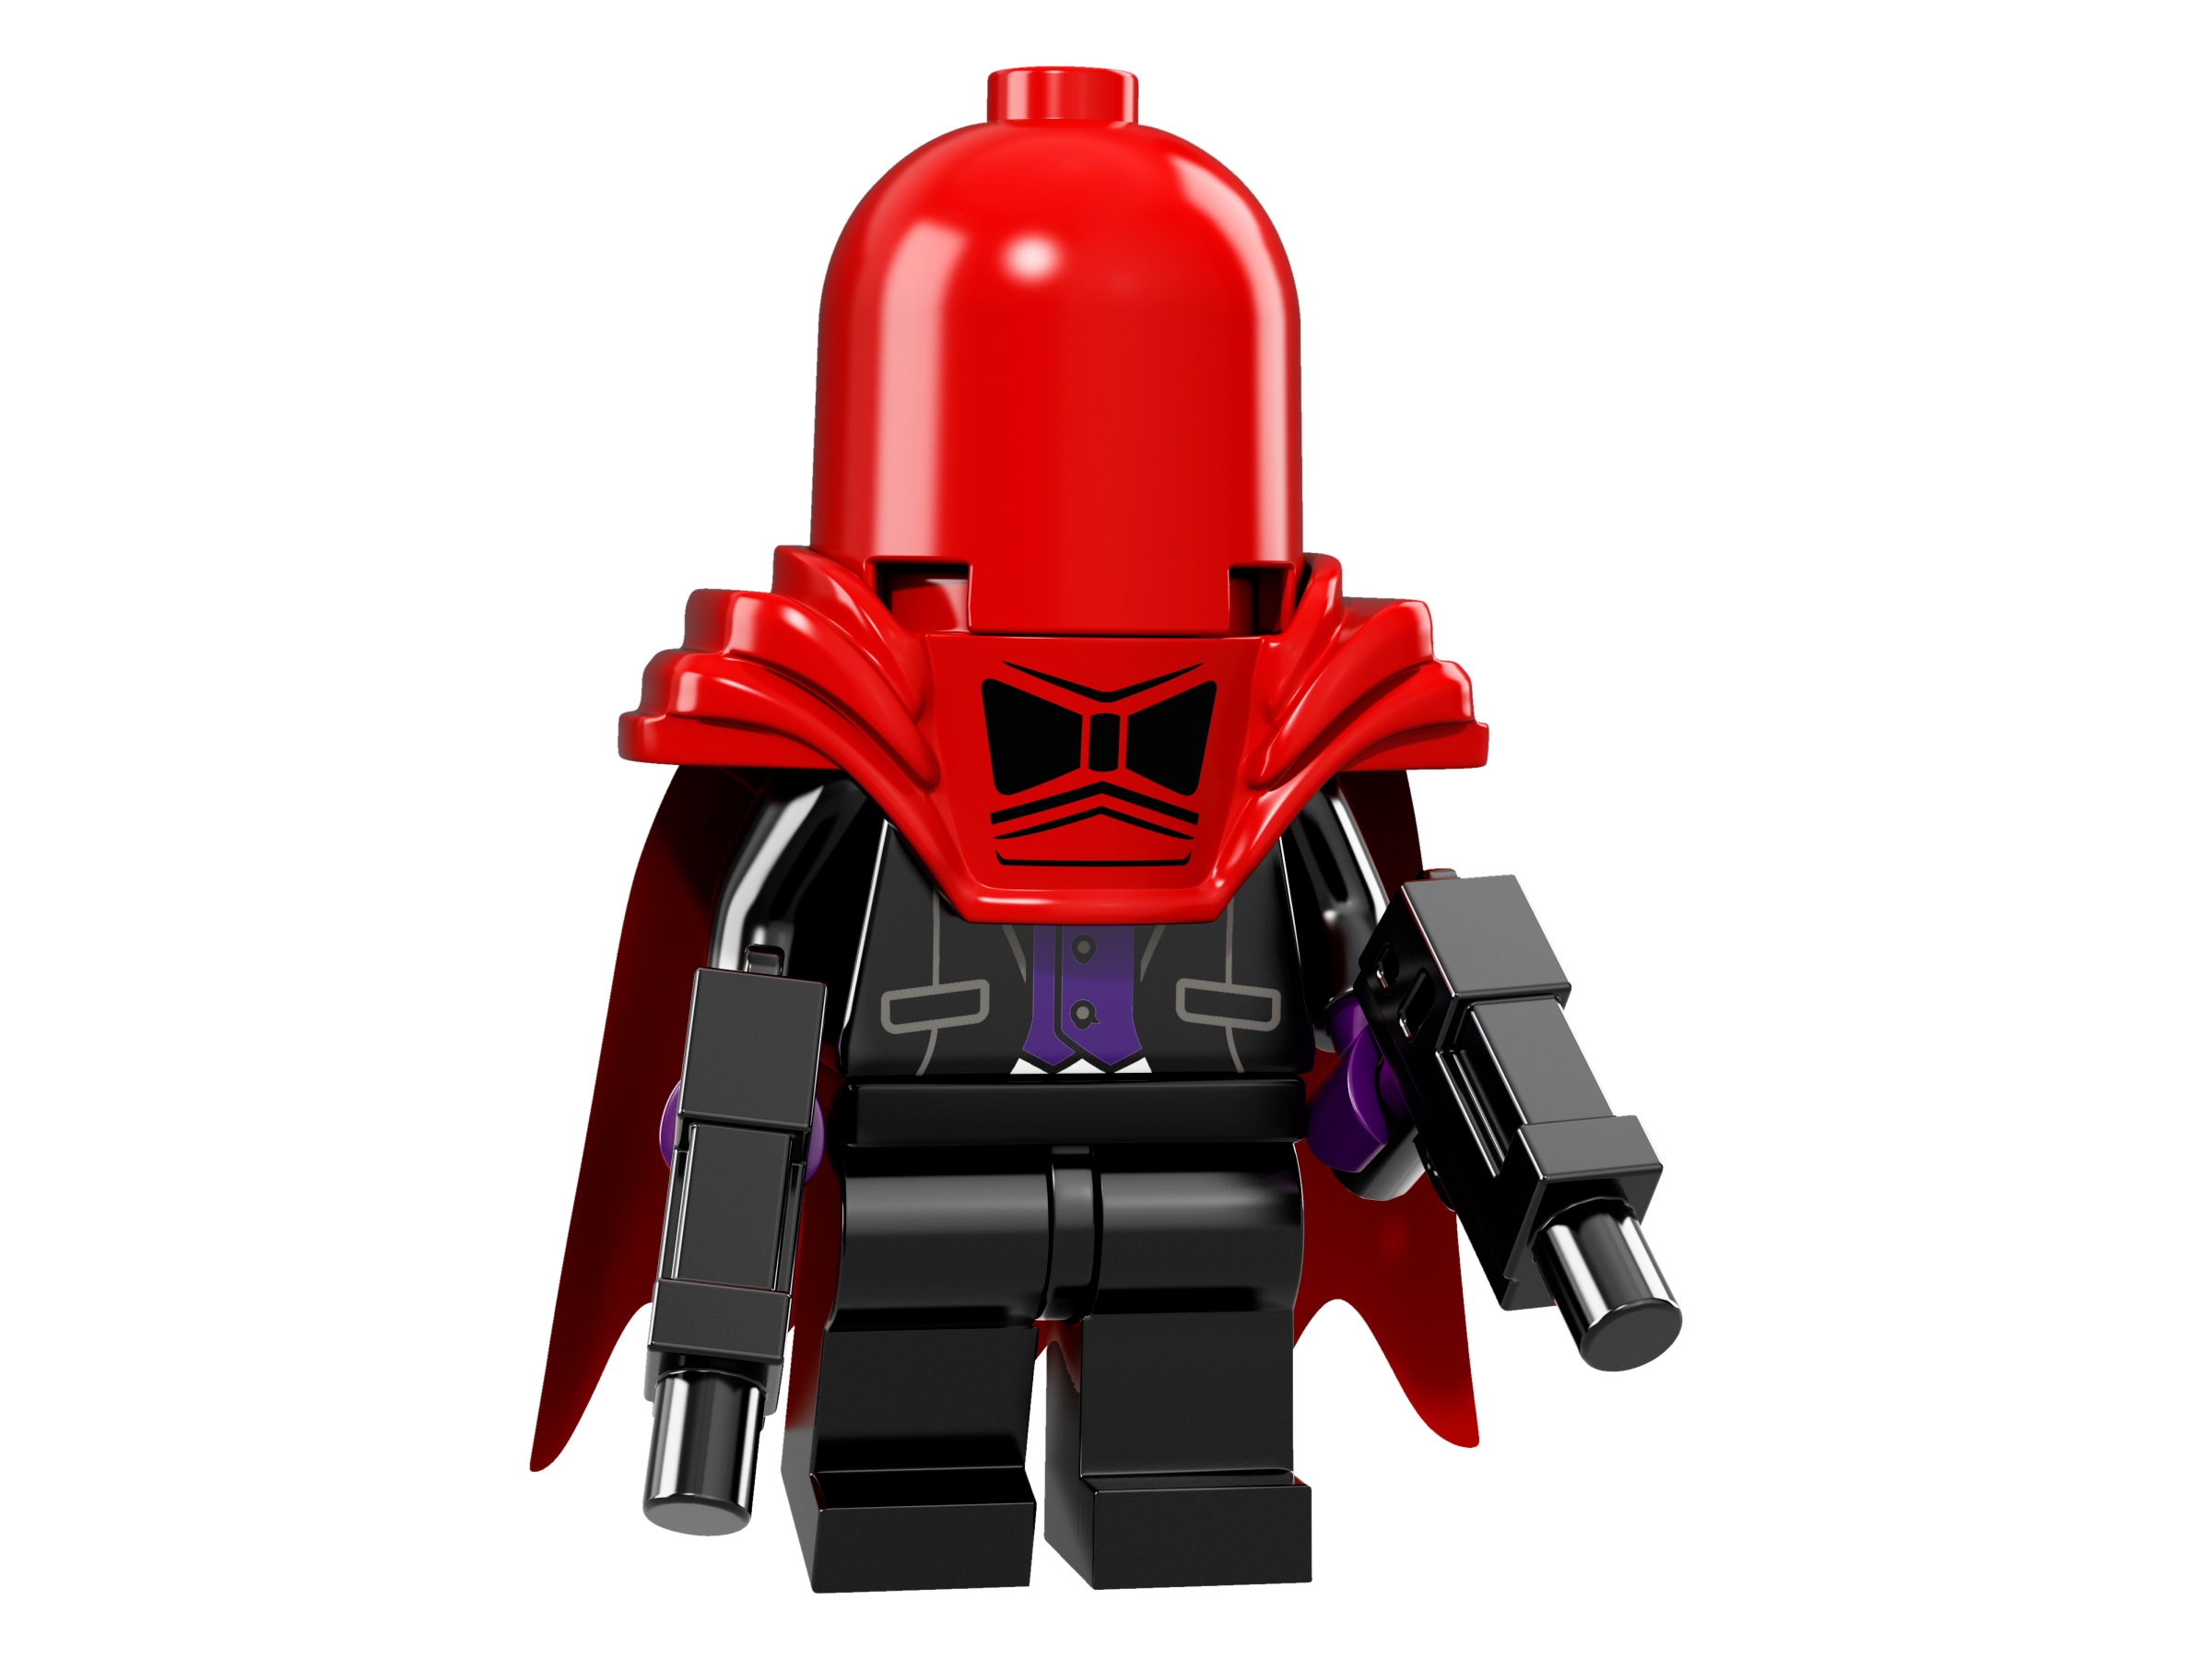 THE LEGO® BATMAN MOVIE 71017, Minifigures